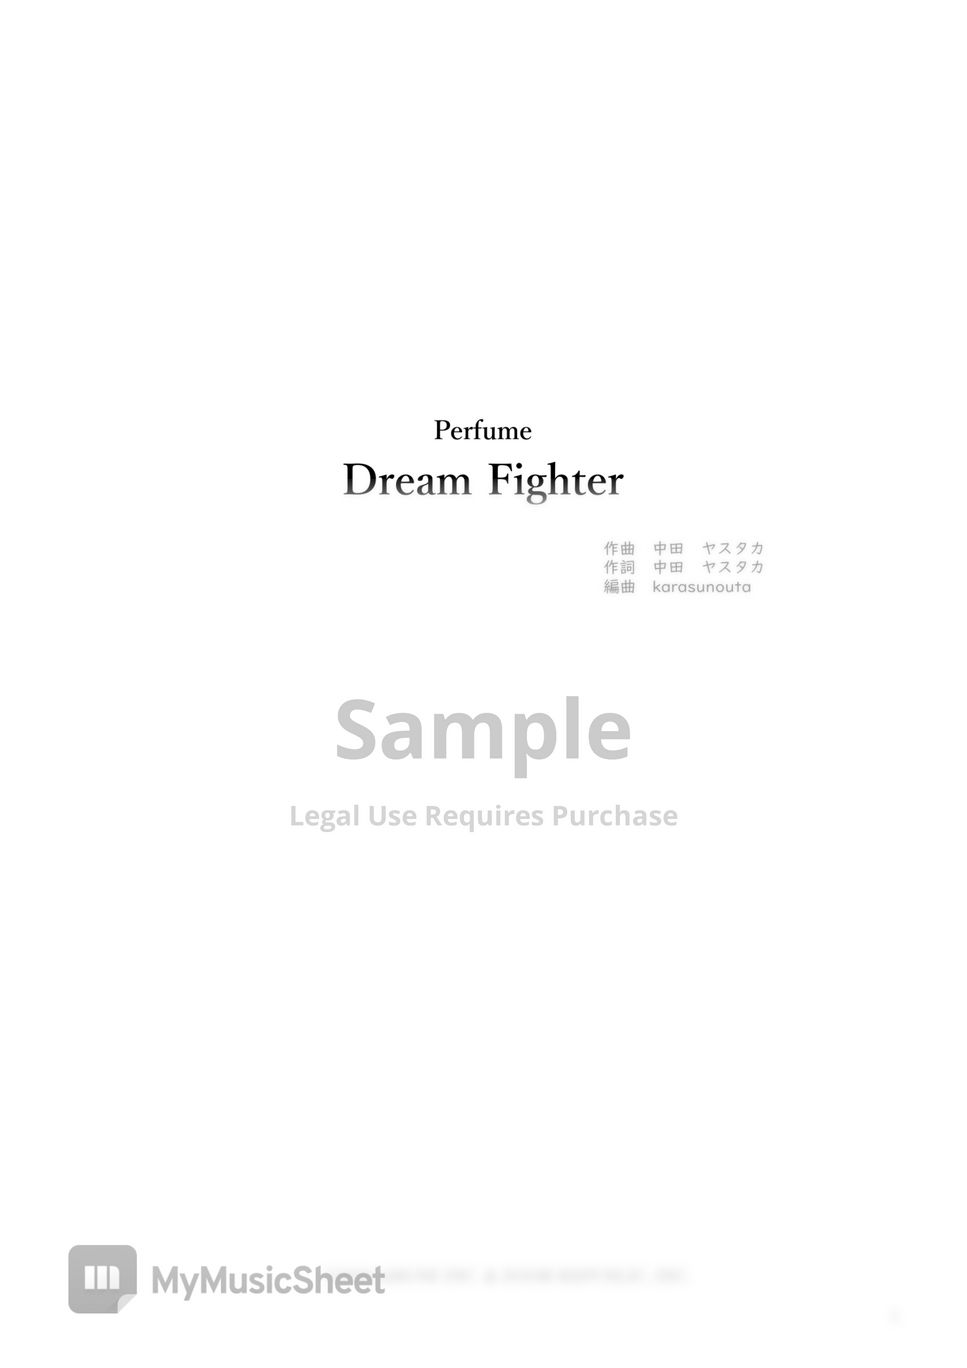 Perfume - Dream Fighter (ピアノ弾き語り / 歌詞付き / コード付き) by karasunouta